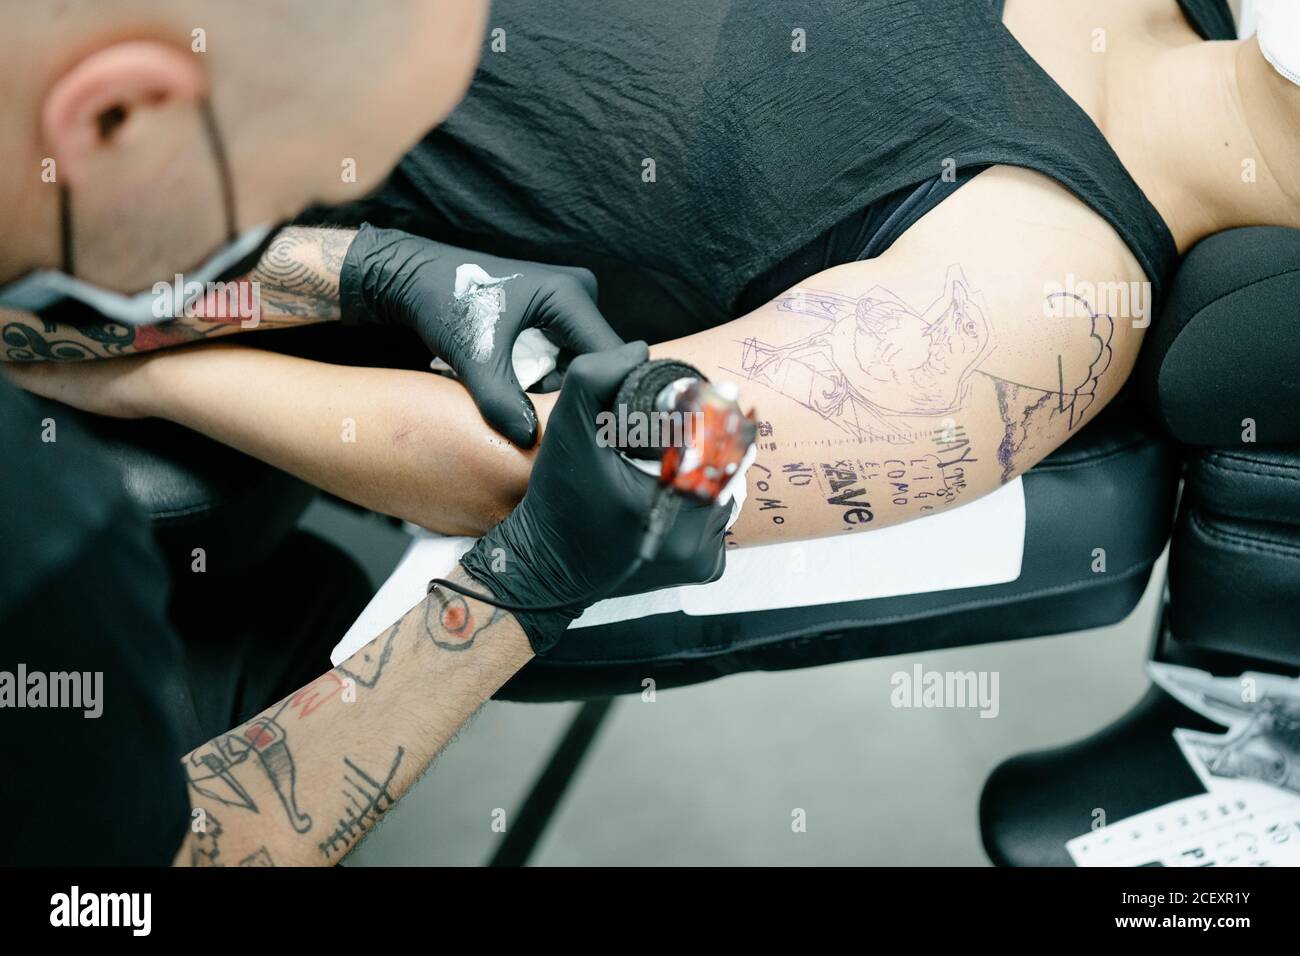 See more Realistic machine arm tattoos an arm  Tatuajes manga completa  Tatuaje manga brazo Brazos tatuados